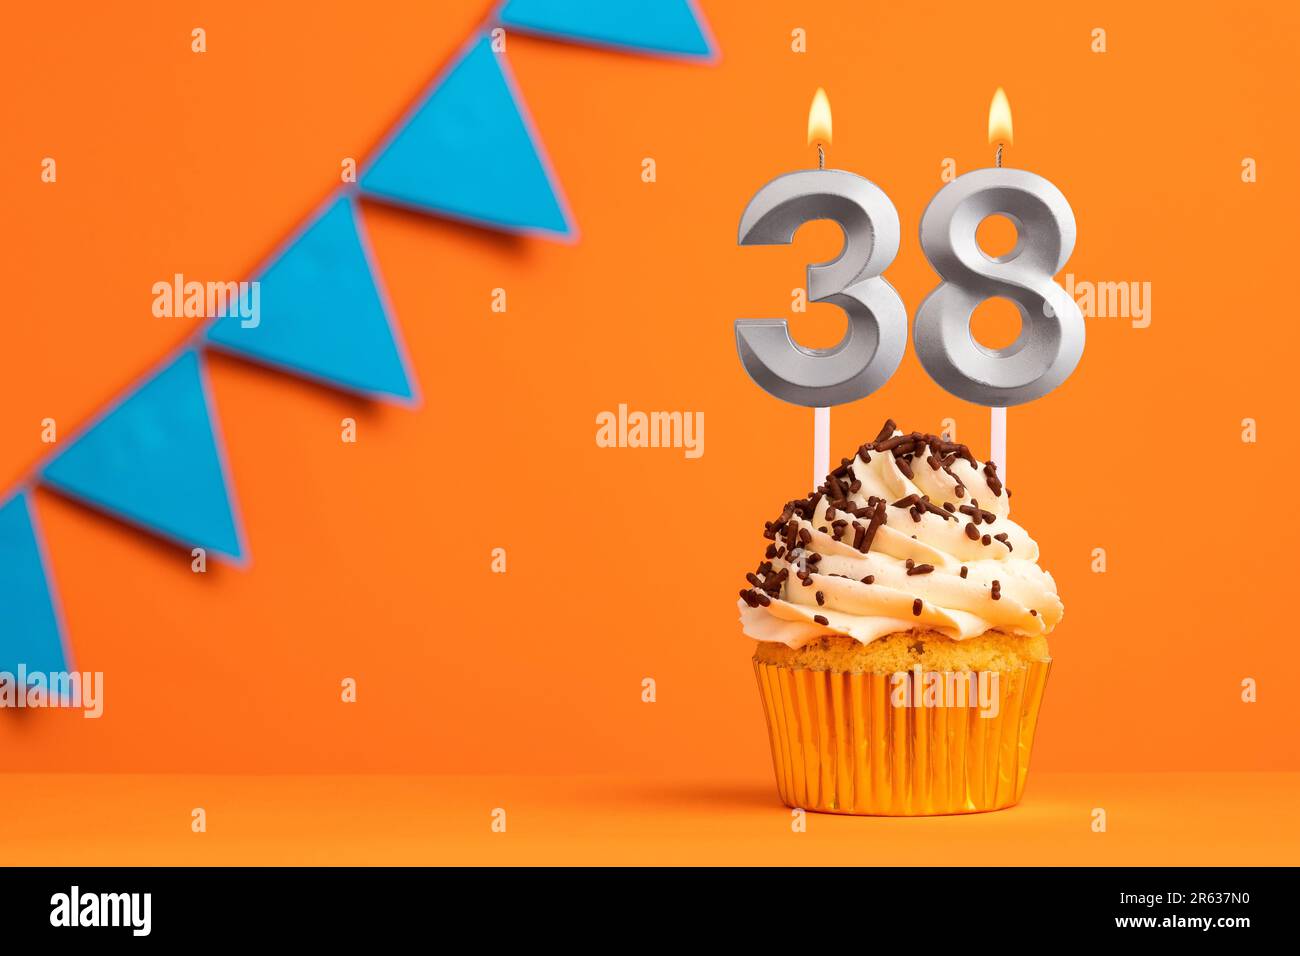 Birthday cake with candle number 38 - Orange background Stock Photo - Alamy